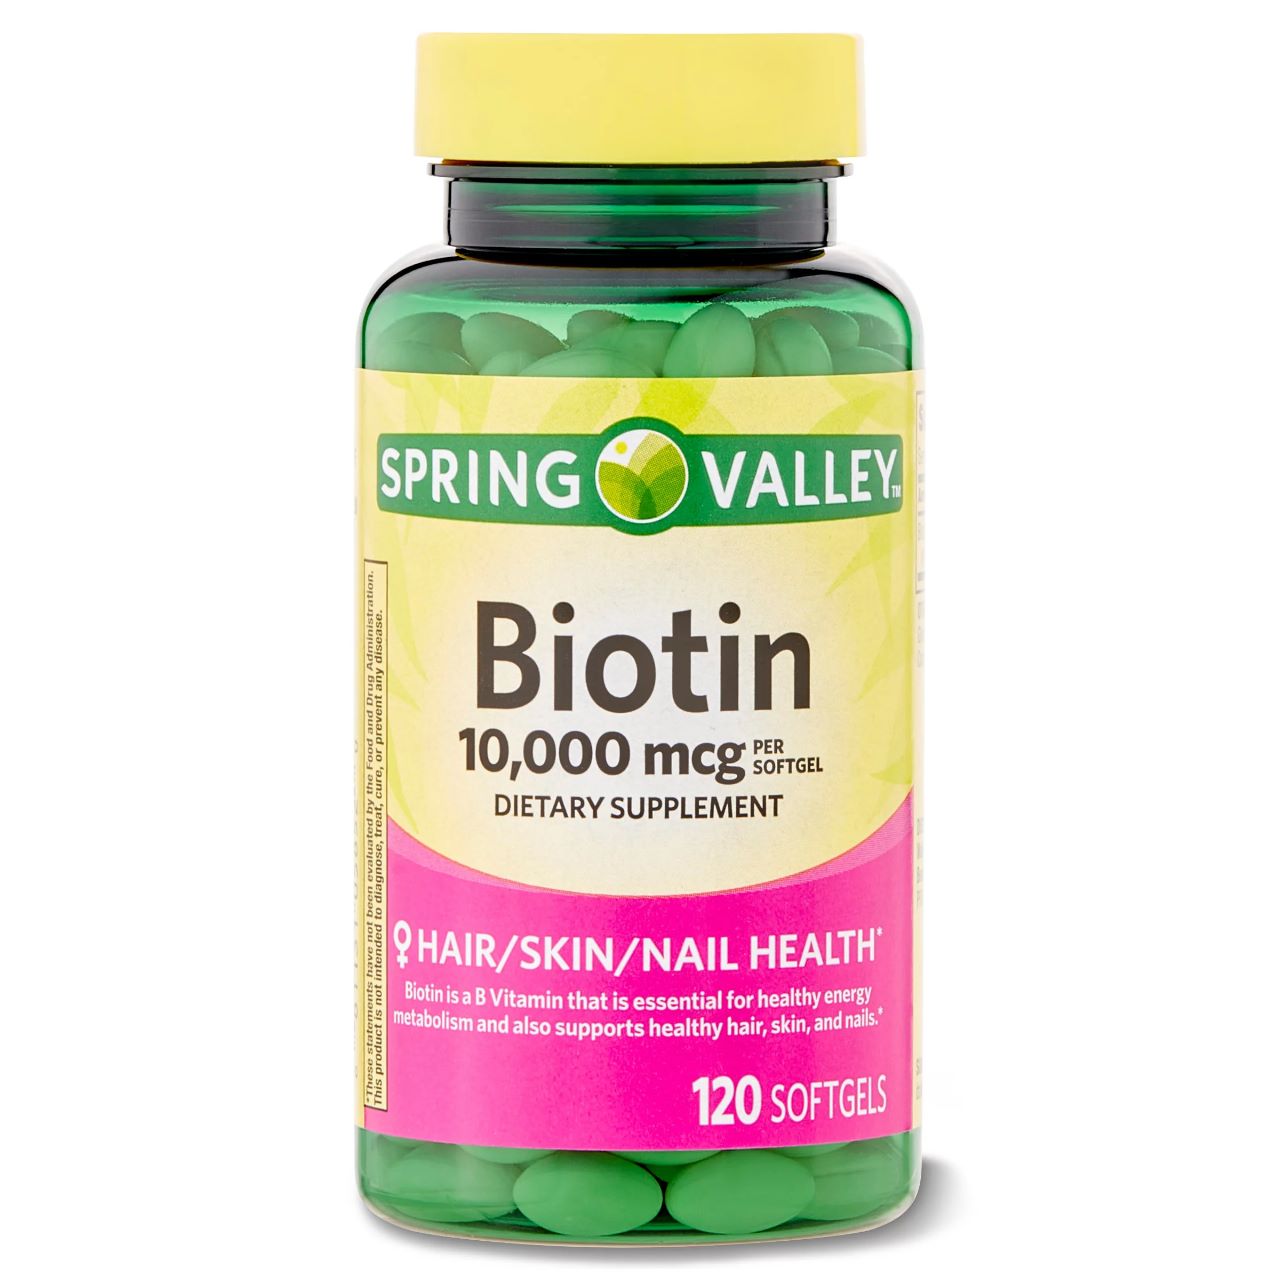 Spring Valley - Biotin Softgels Dietary Supplement 10,000 mcg